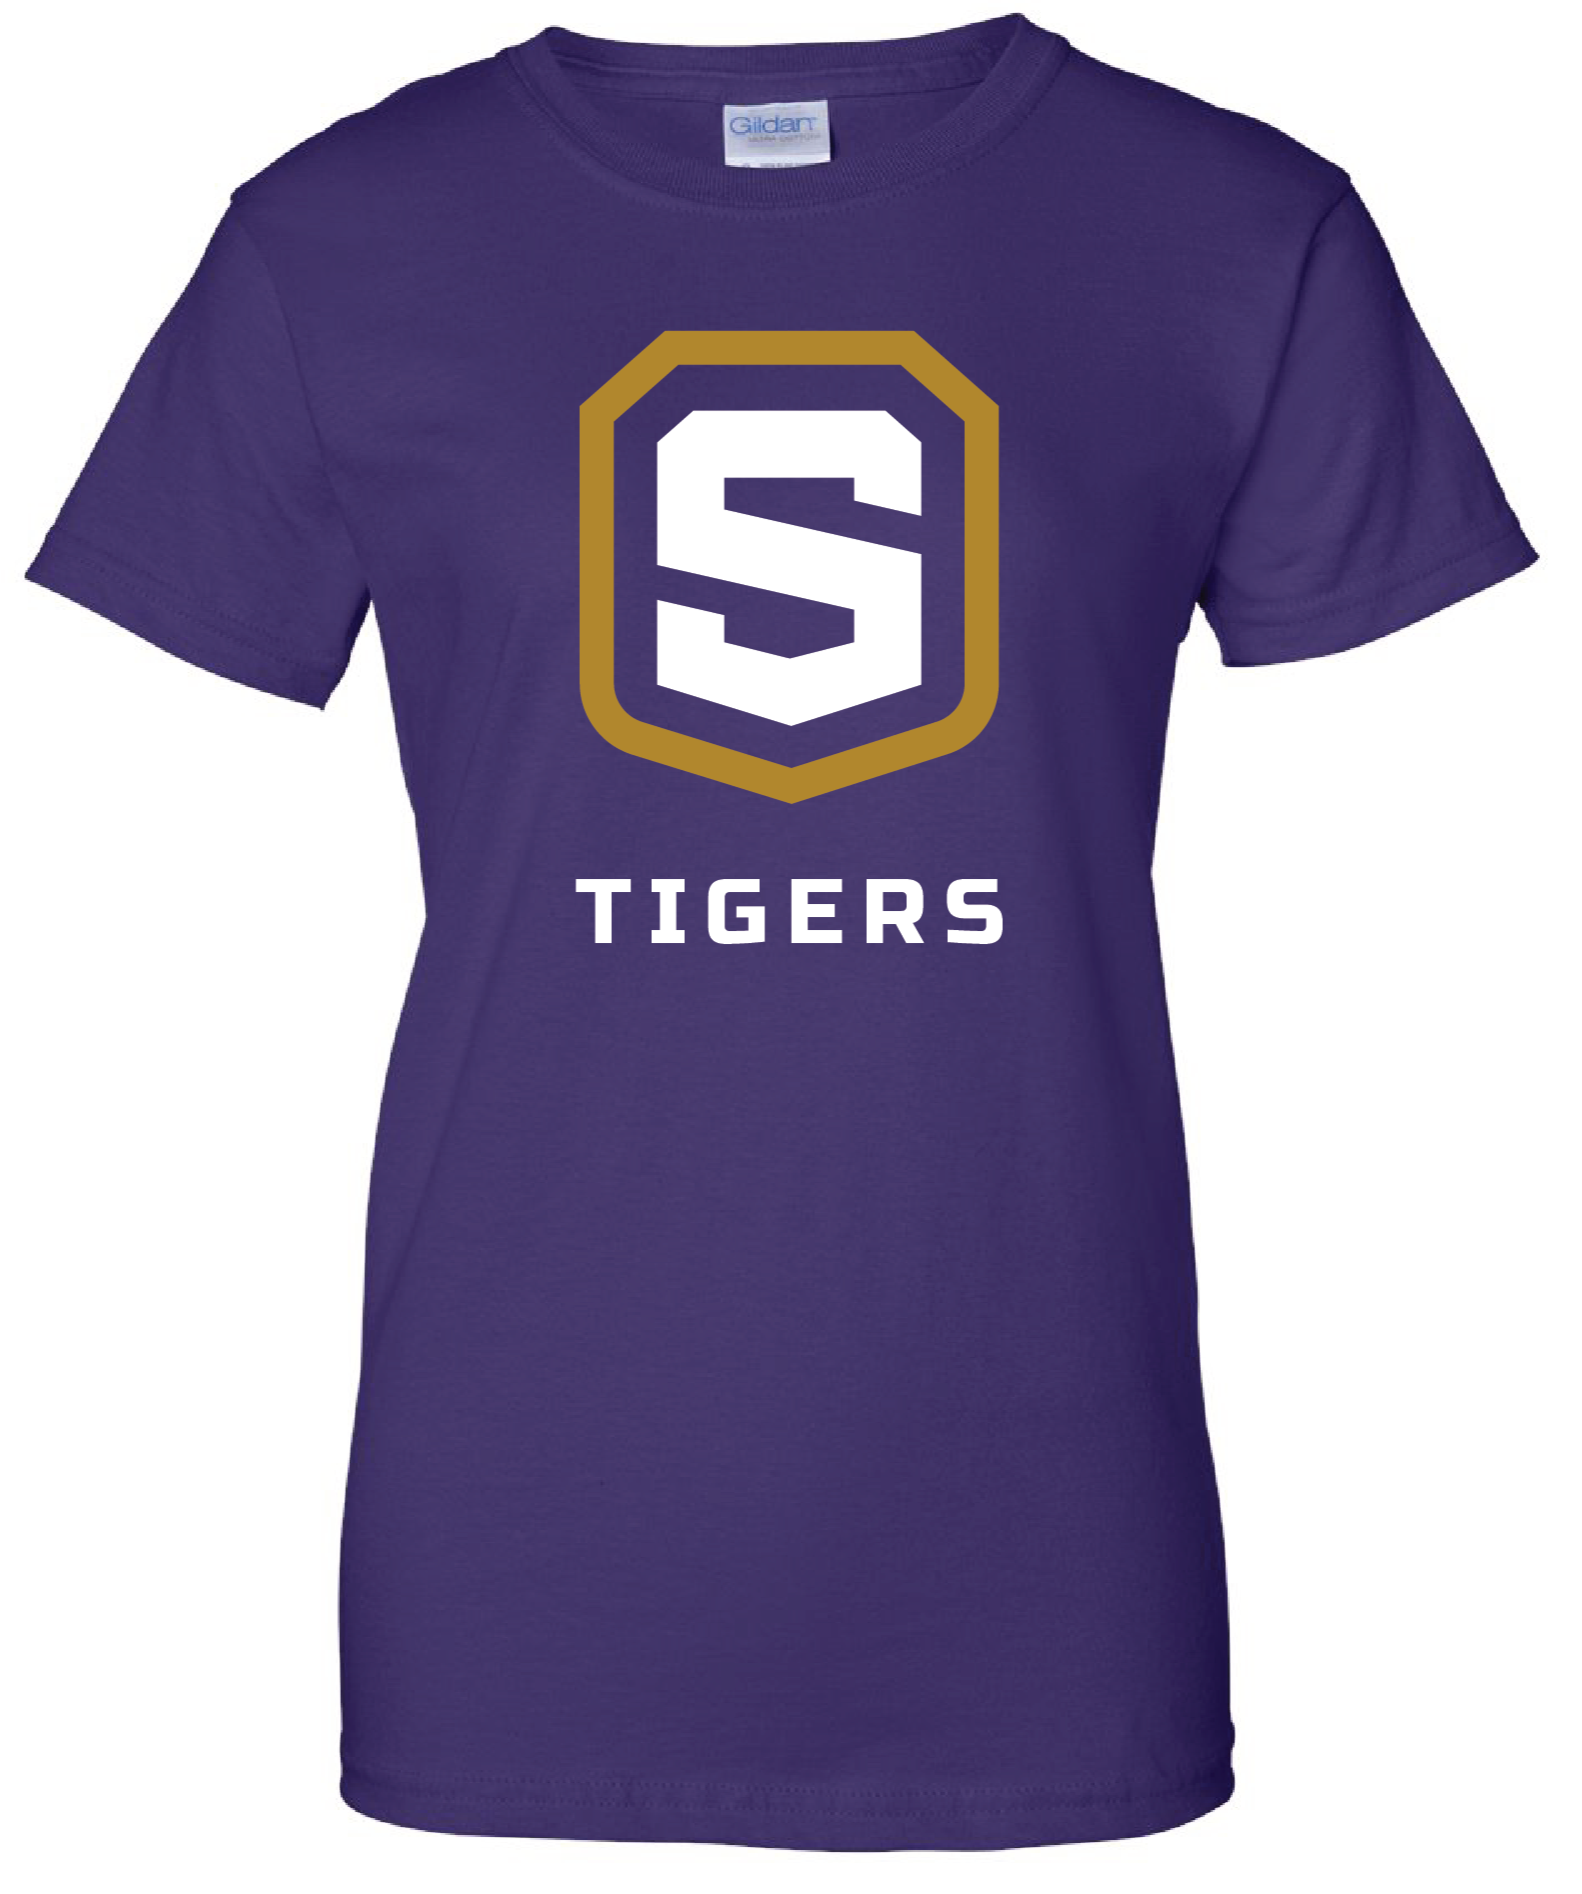 Women's Short Sleeve Tees - Spencer Tigers